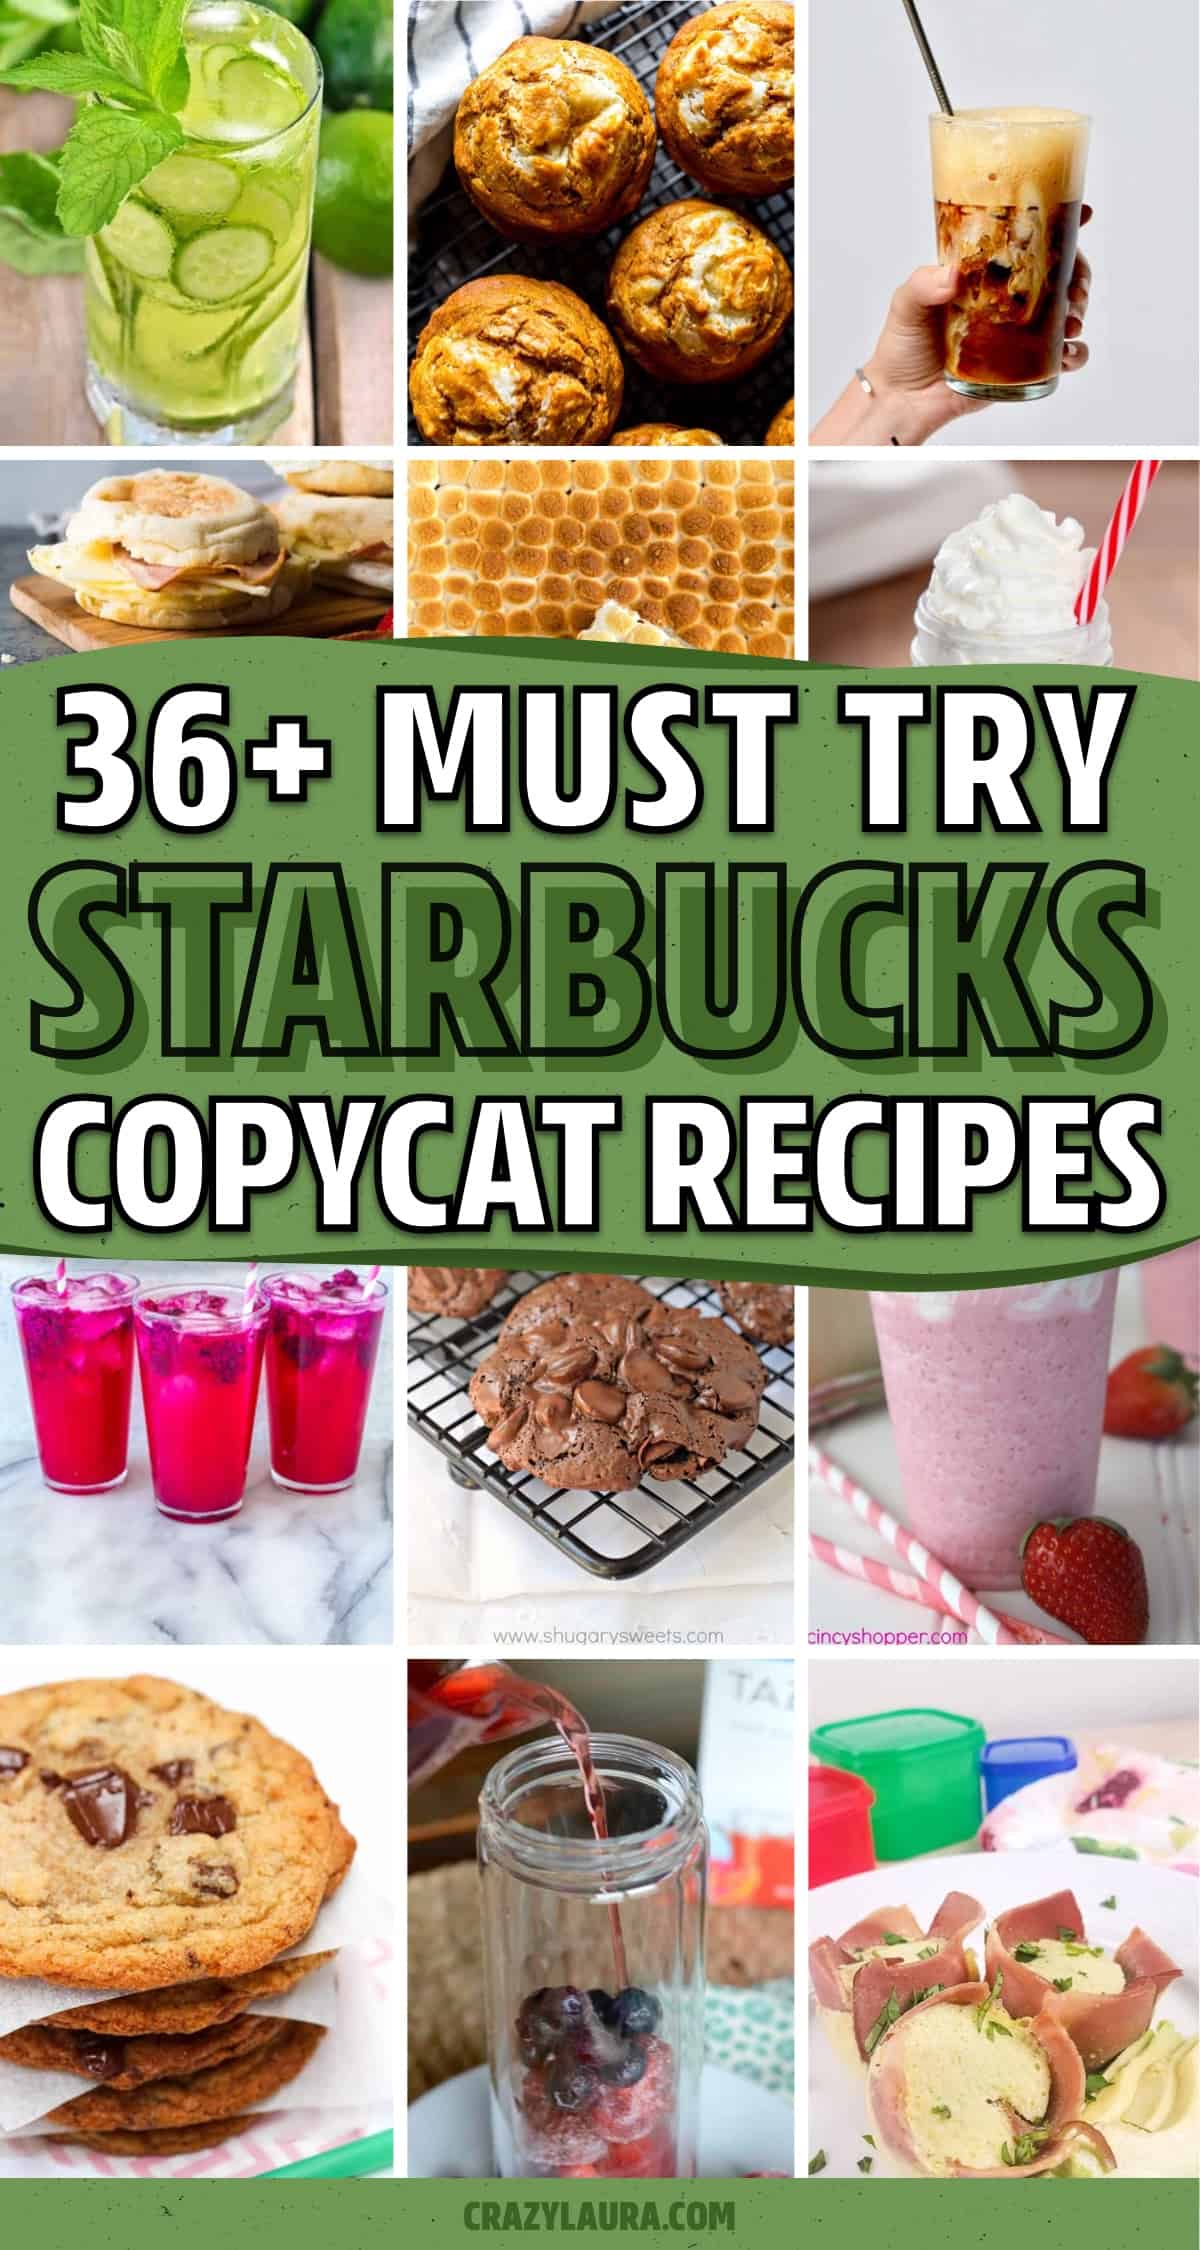 starbucks copycat recipes to try